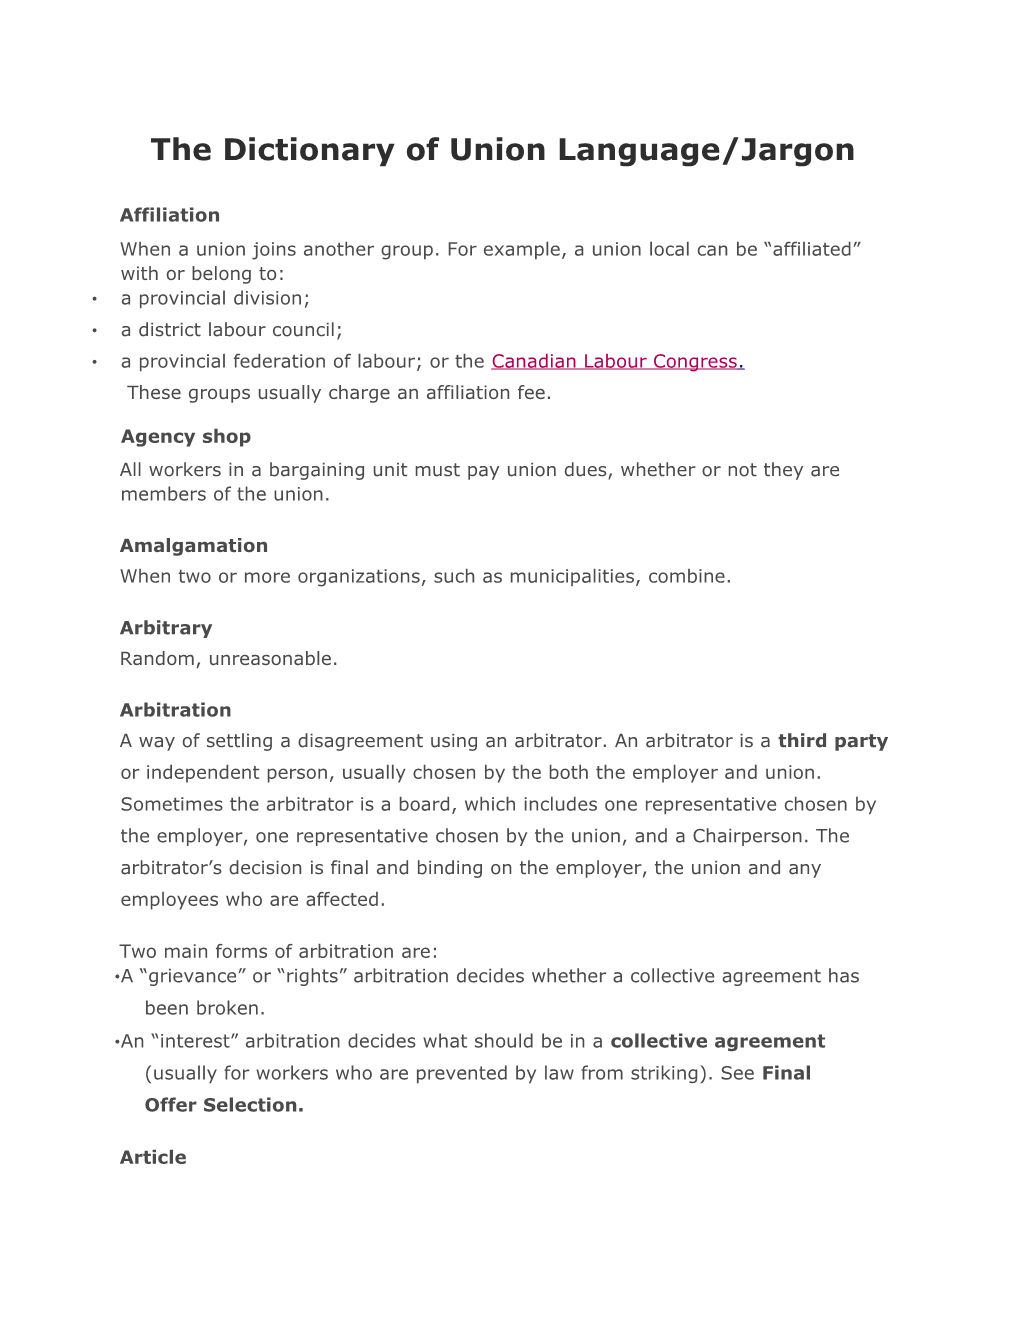 The Dictionary of Union Language/Jargon